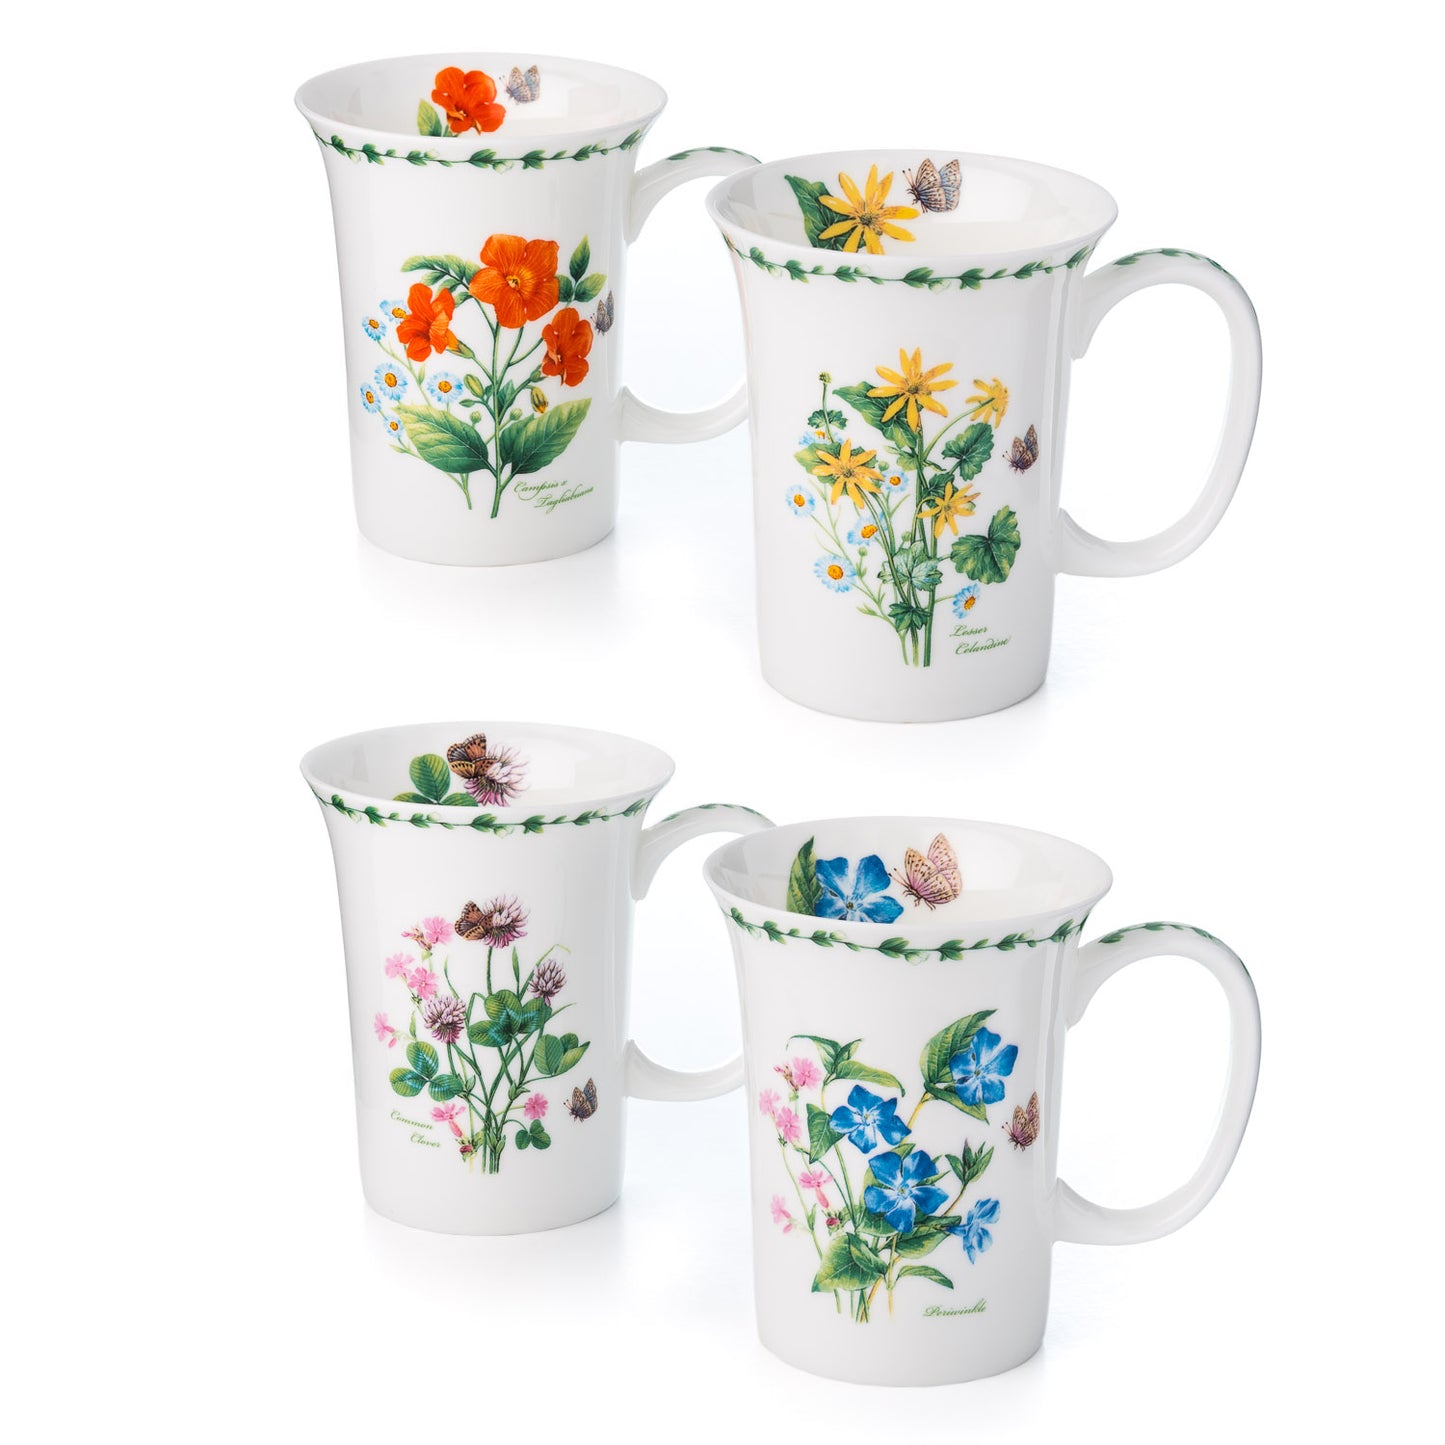 'Garden Meadow' Set of 4 Mugs